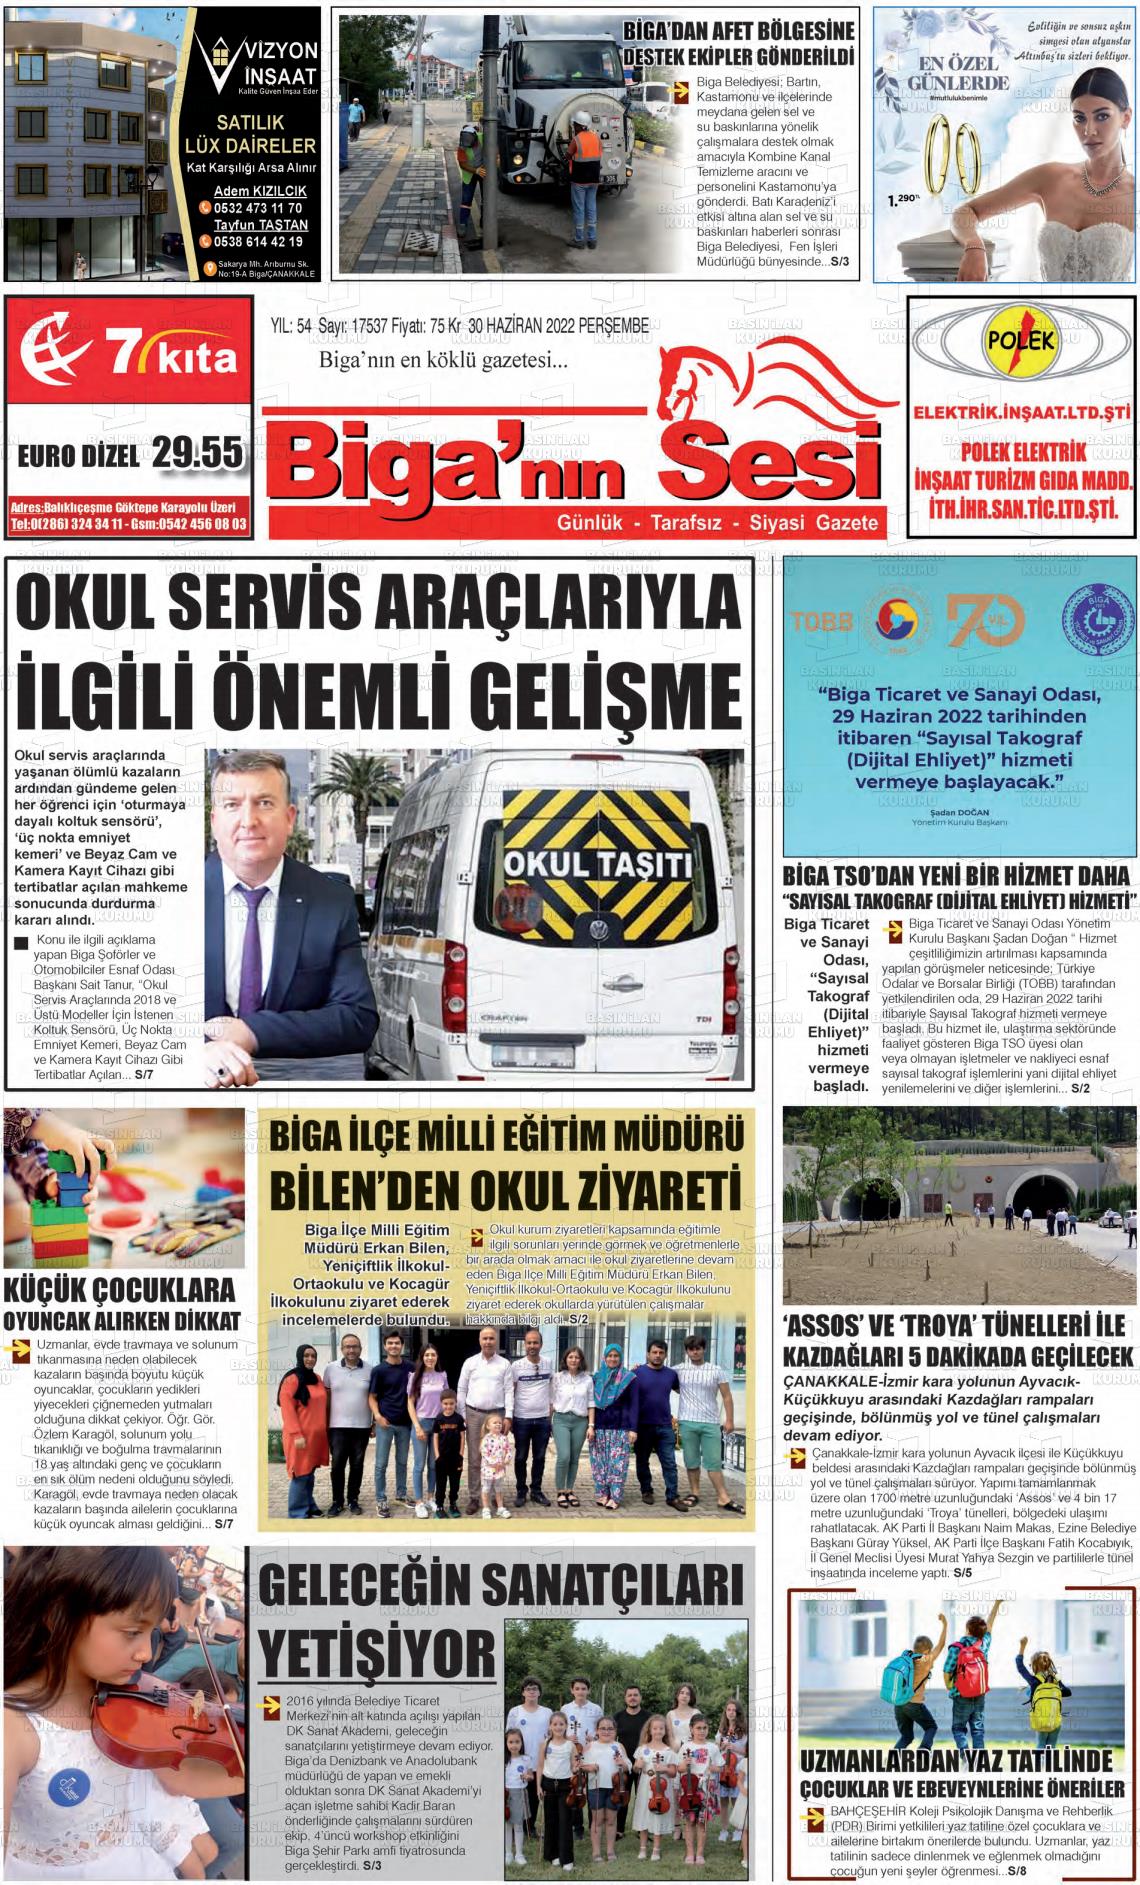 30 Haziran 2022 Biga'nın Sesi Gazete Manşeti